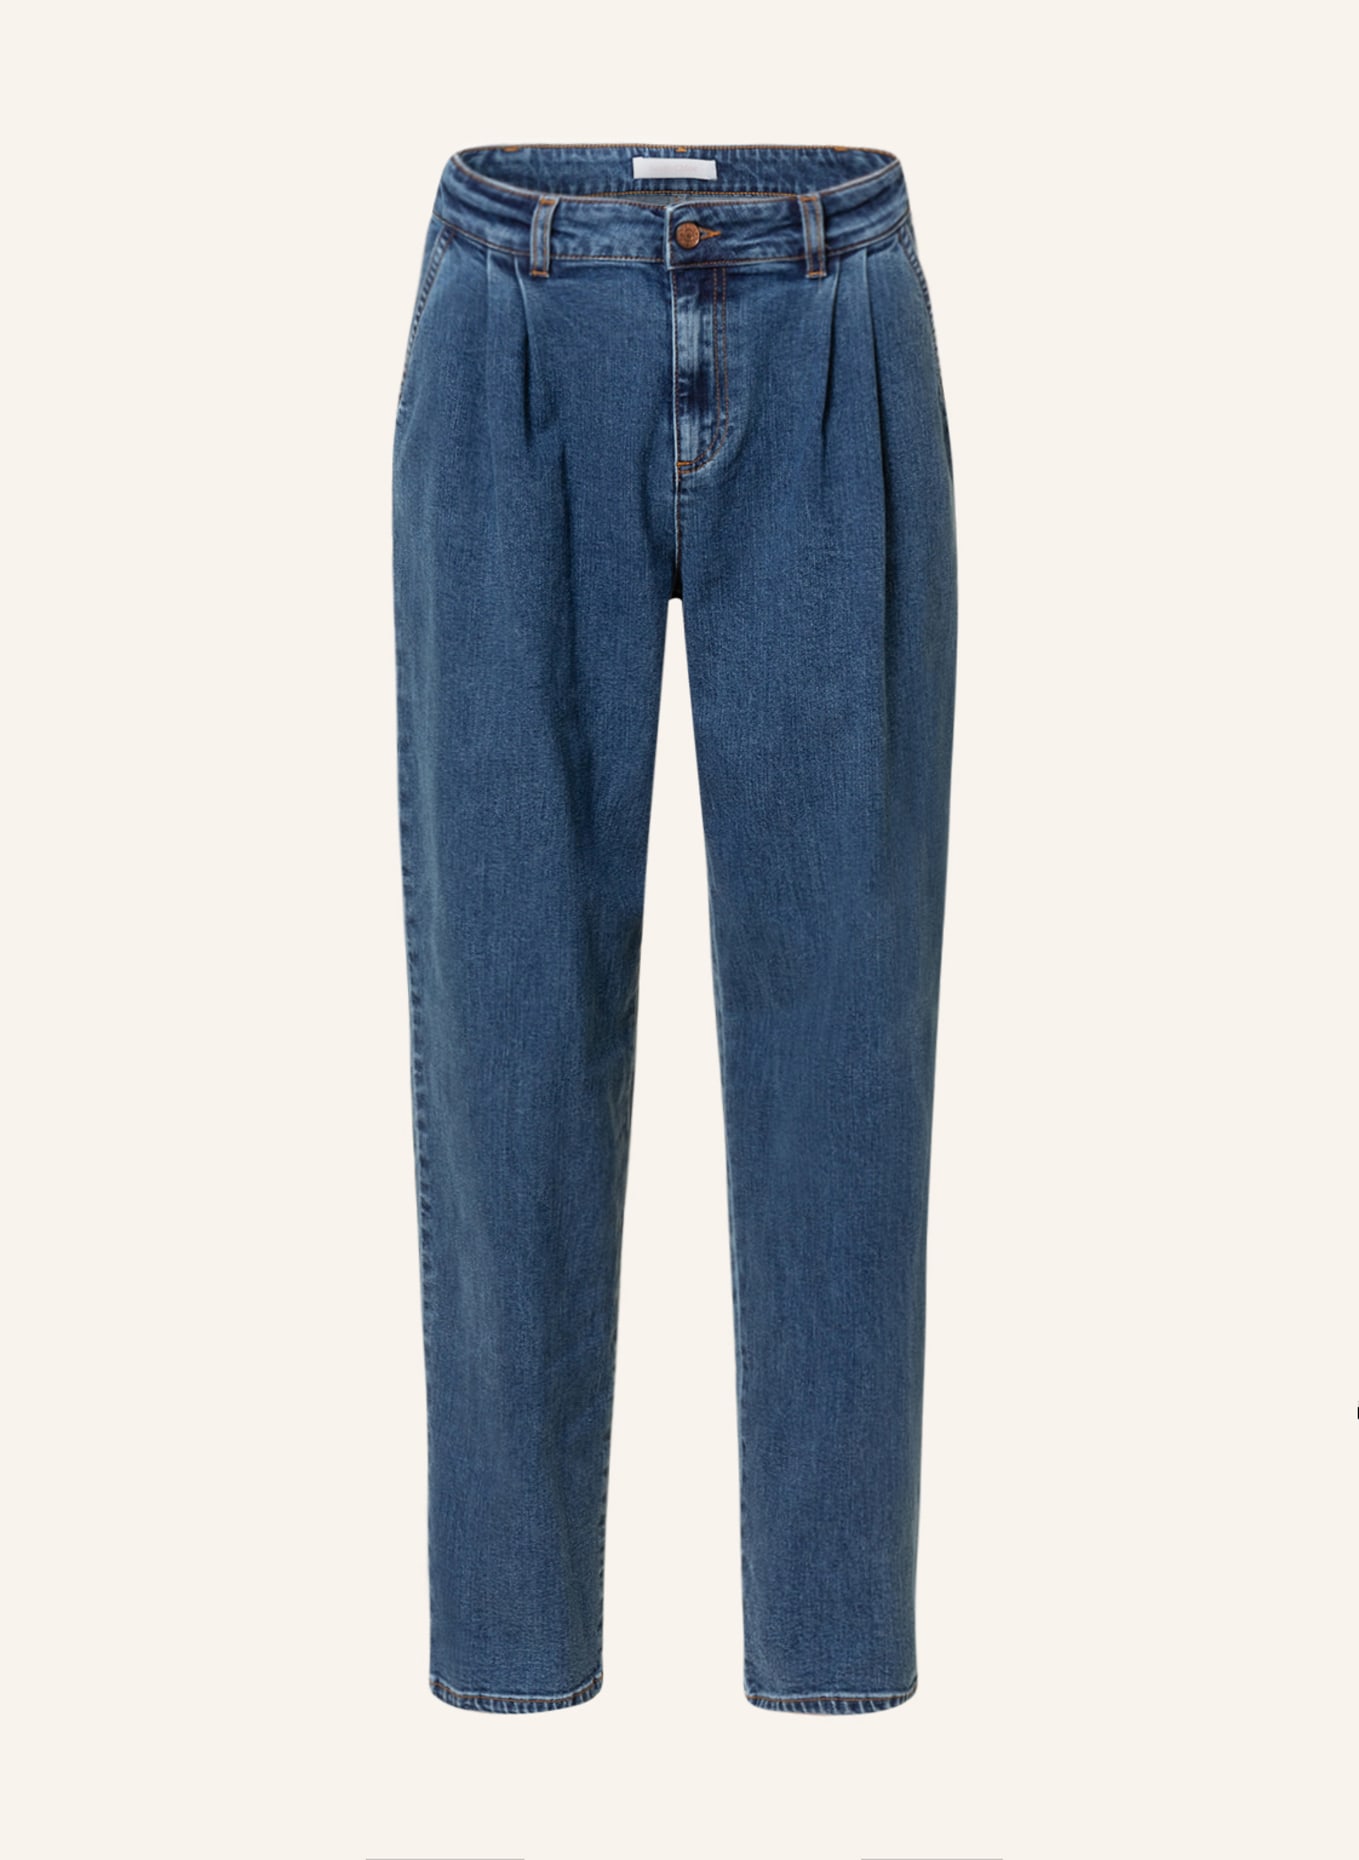 SEE BY CHLOÉ Straight Jeans, Farbe: 477 Deep Denim (Bild 1)